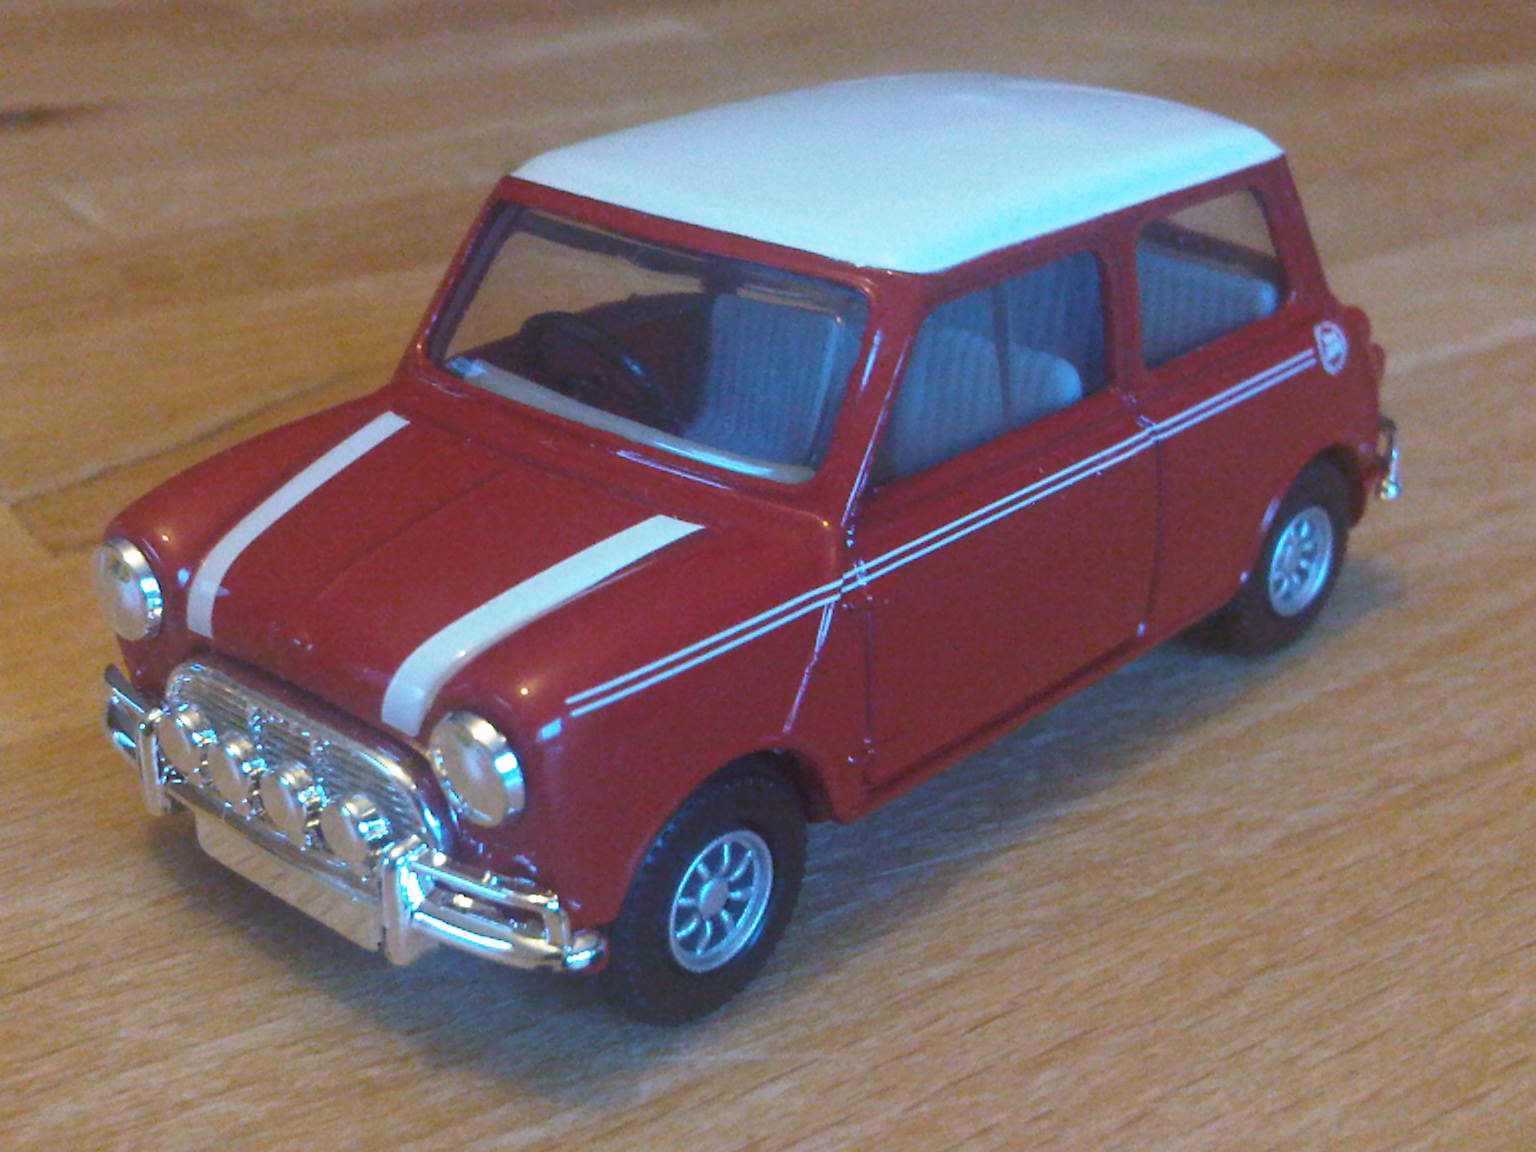 My model cars: Mini Cooper Austin Morris 1/43, by Corgi